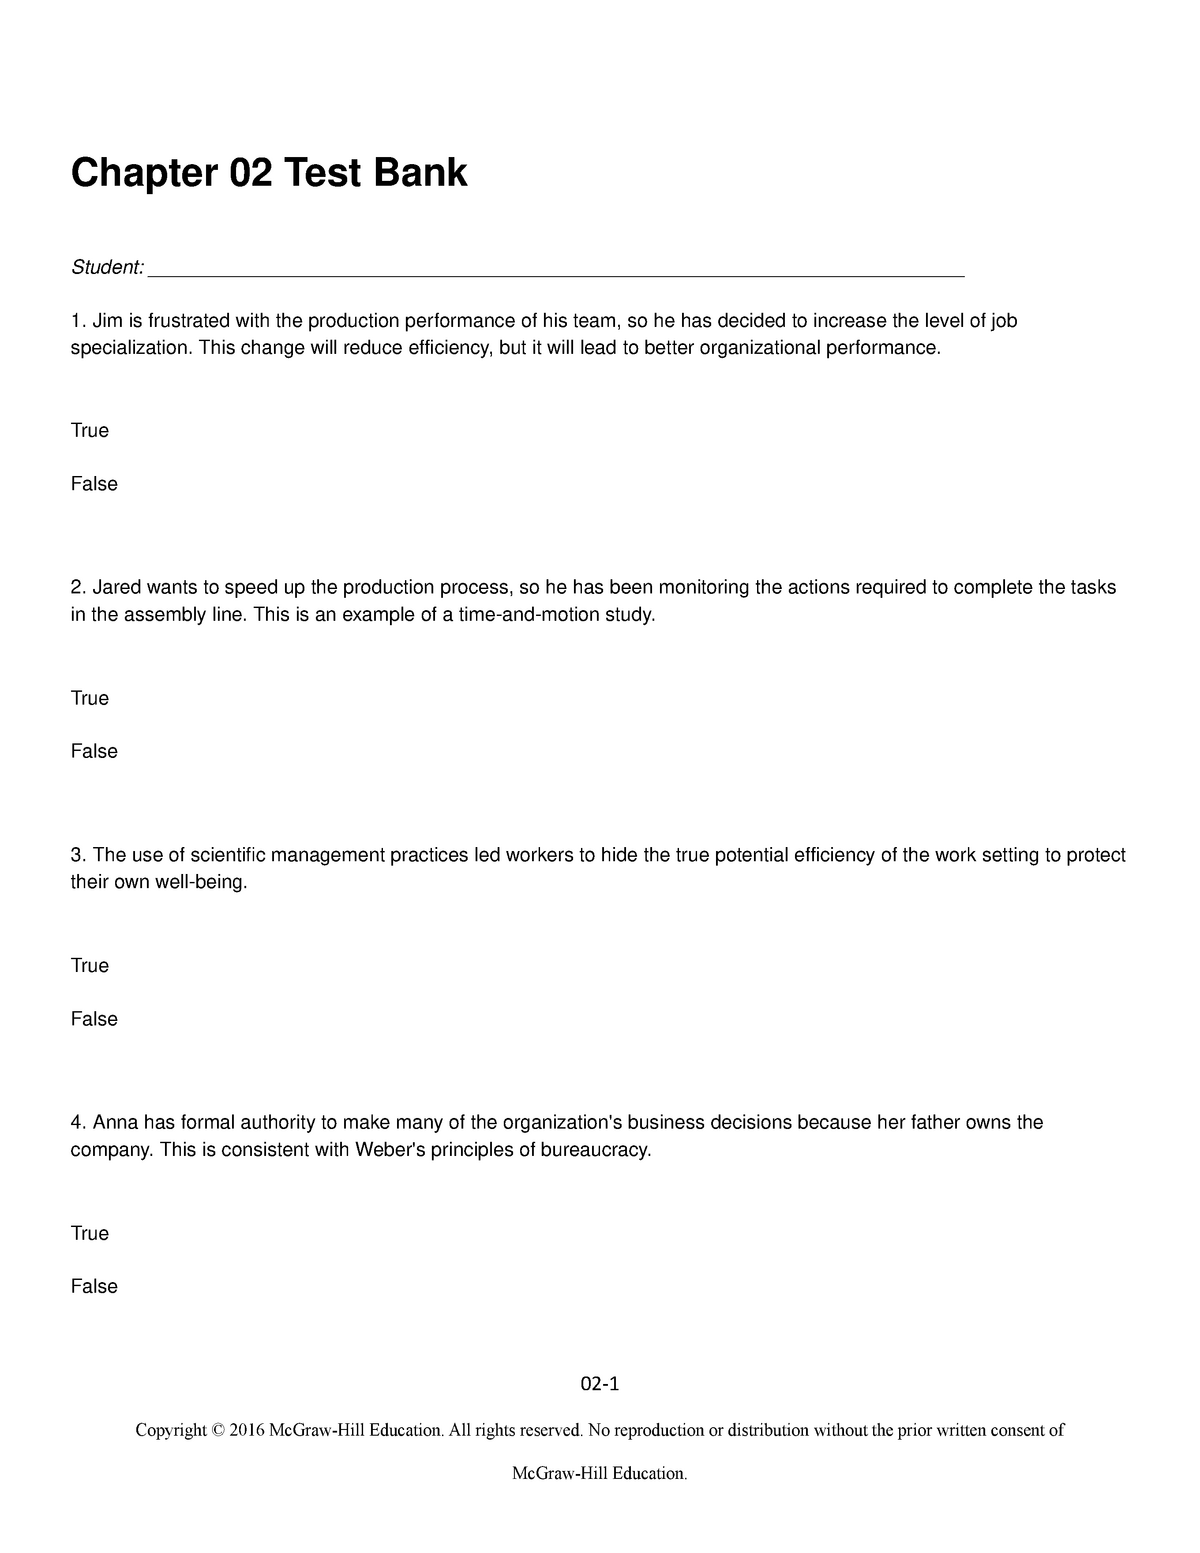 Jones: Examen de testBank Softbank pour accompagner les